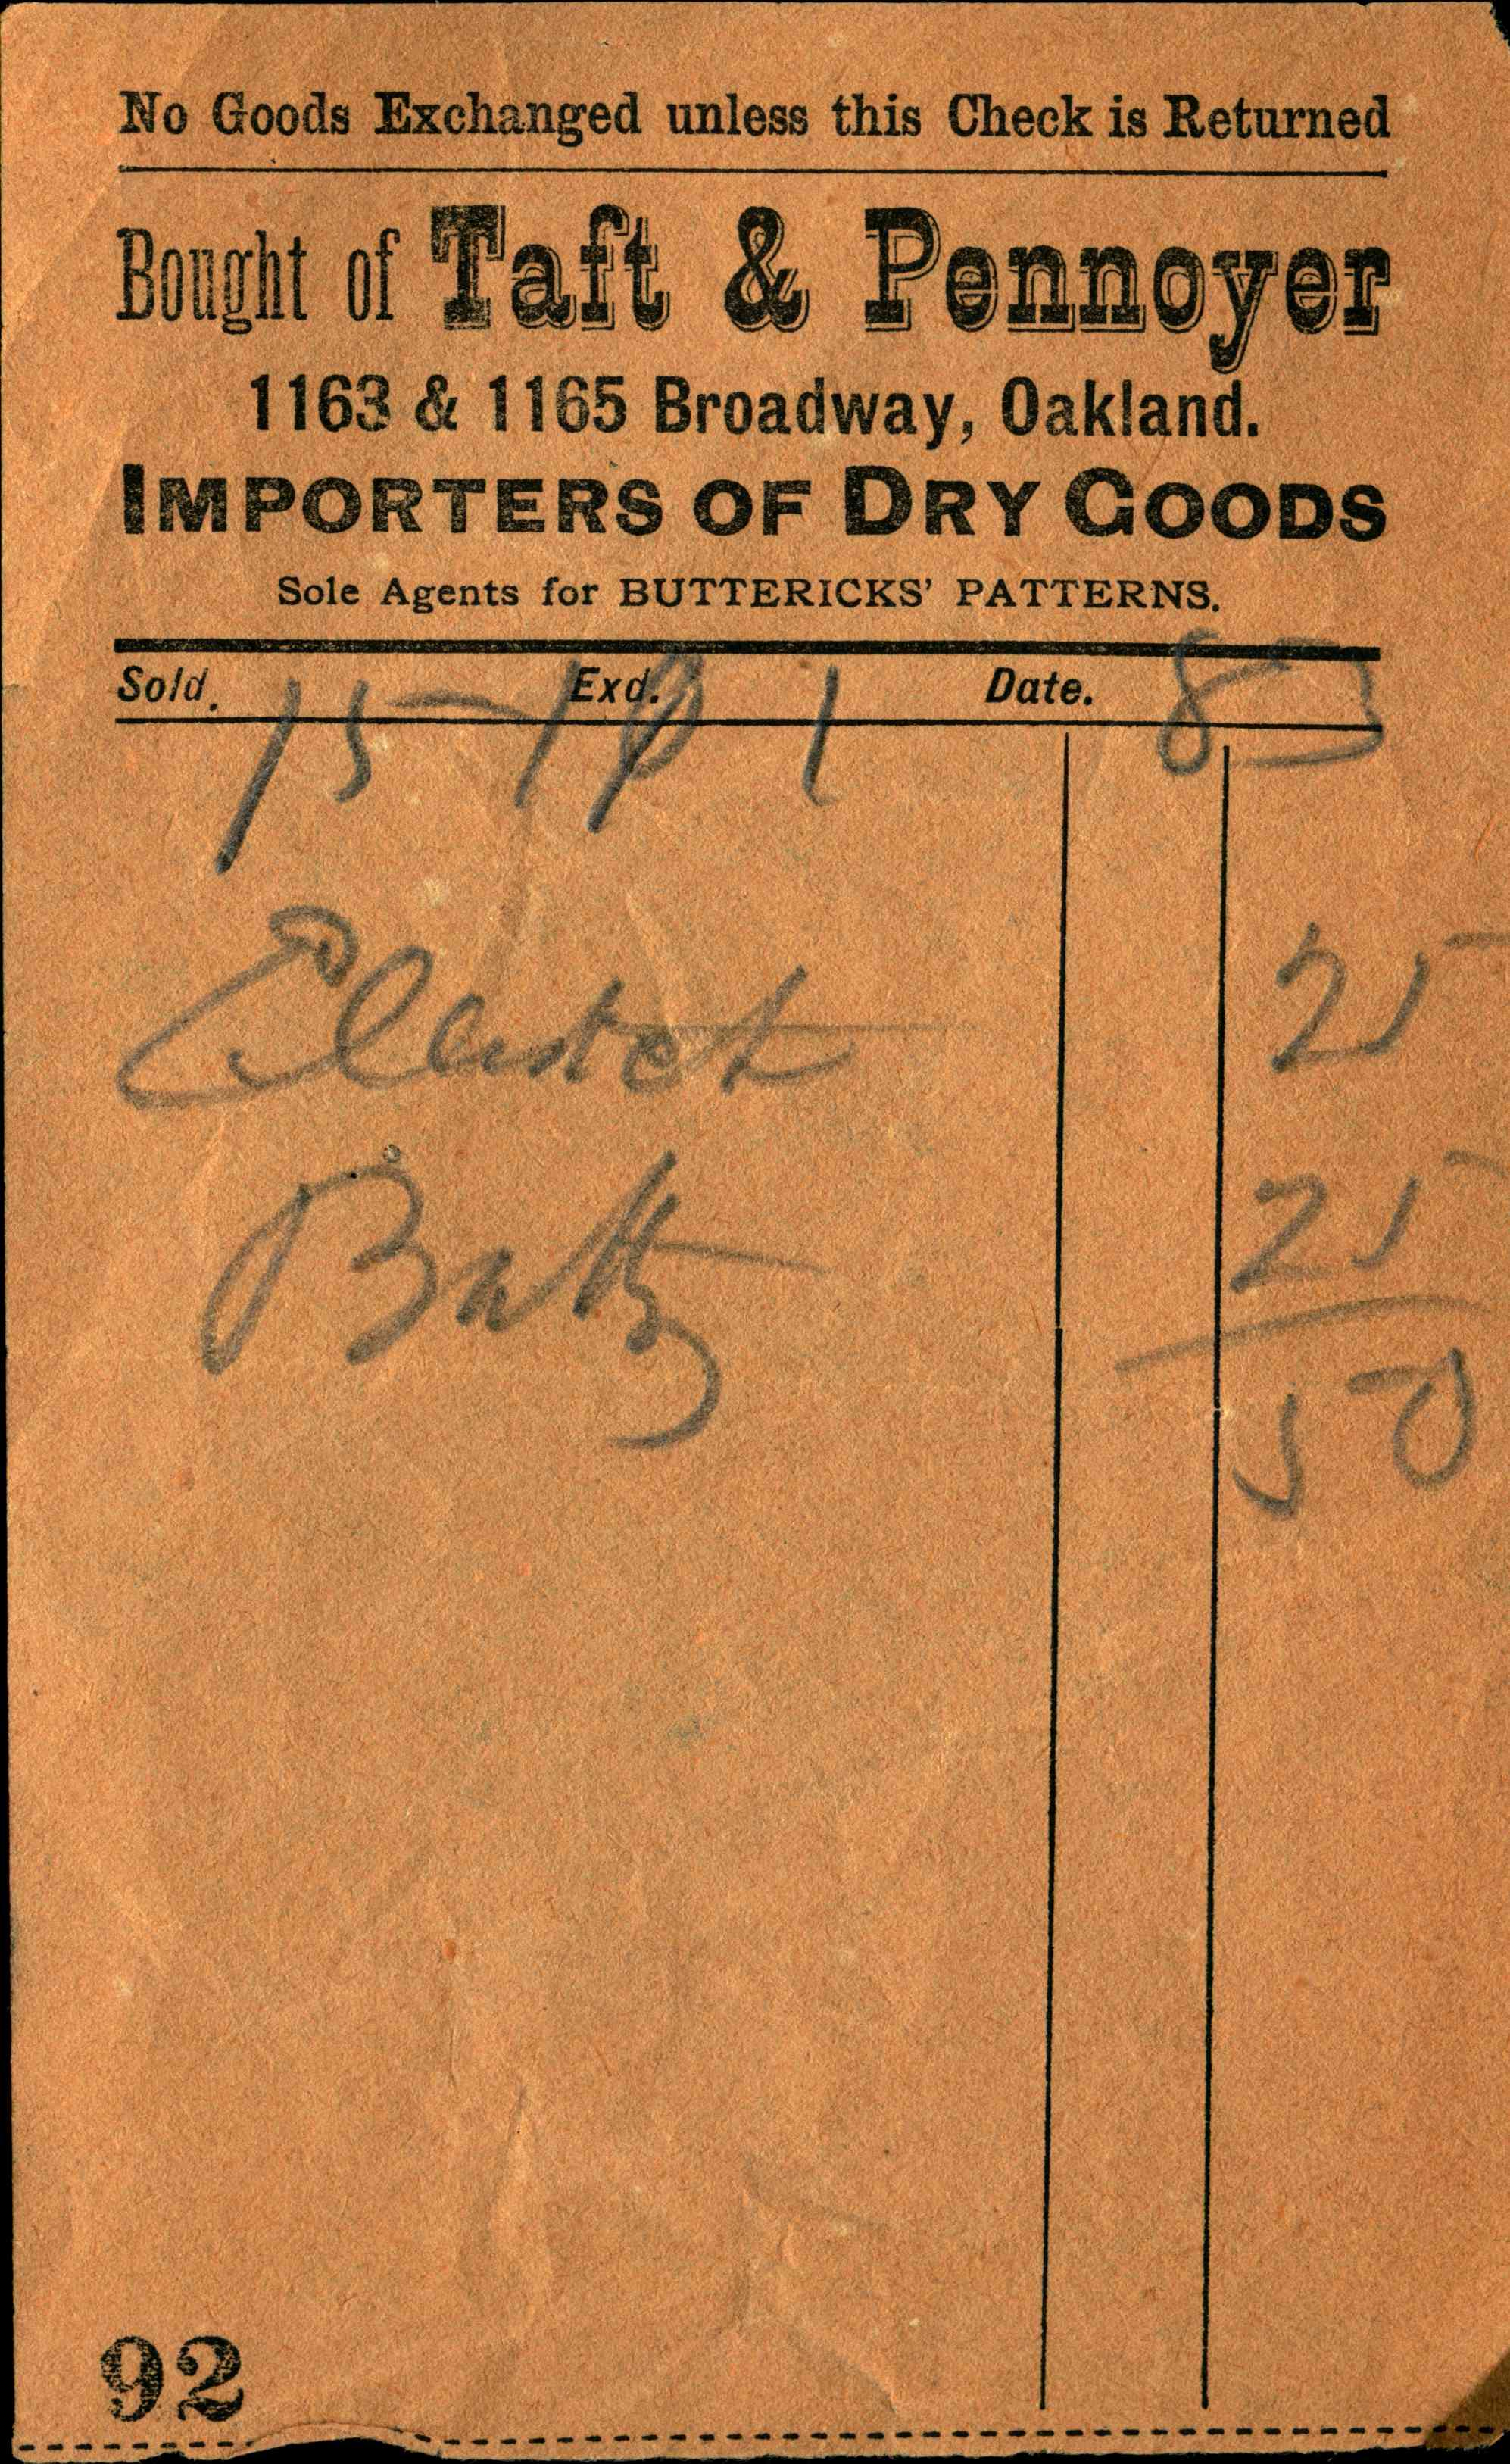 Importers of dry goods